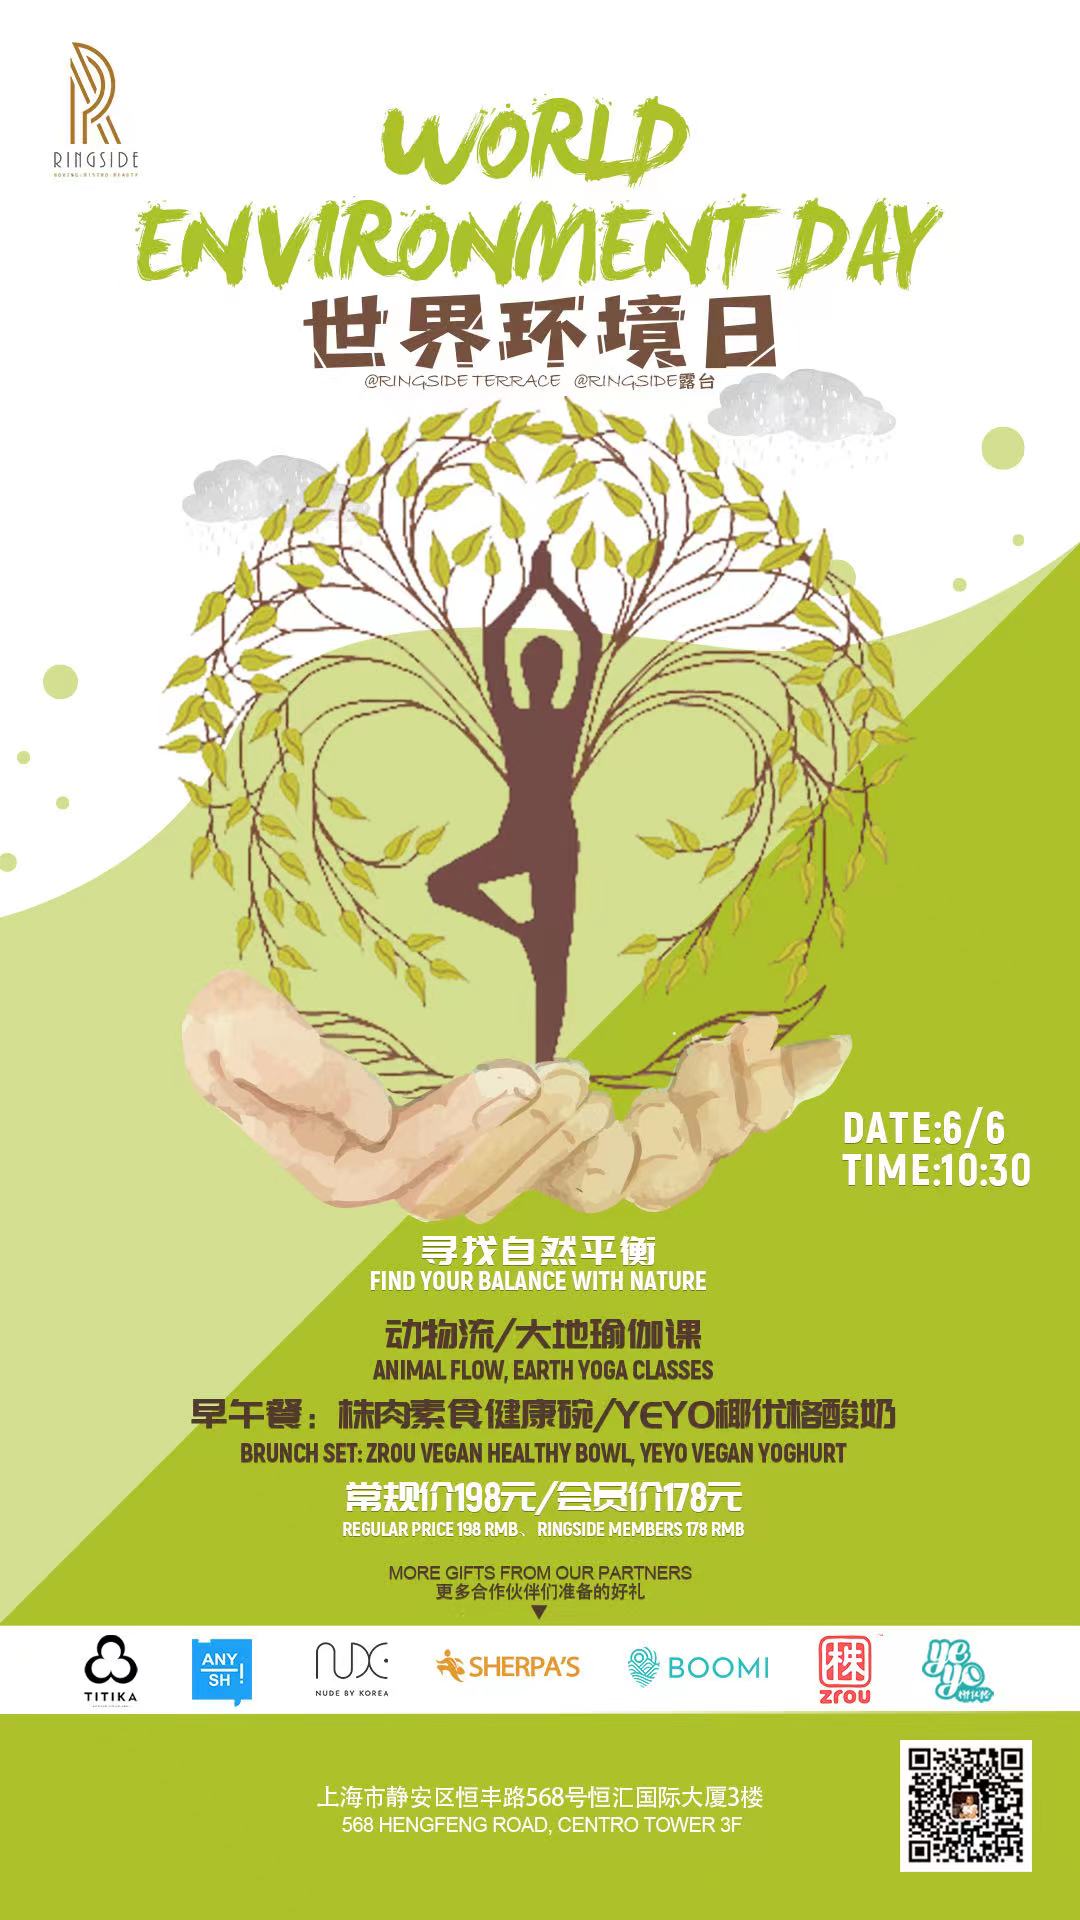 World Environment Day | Shanghai Events